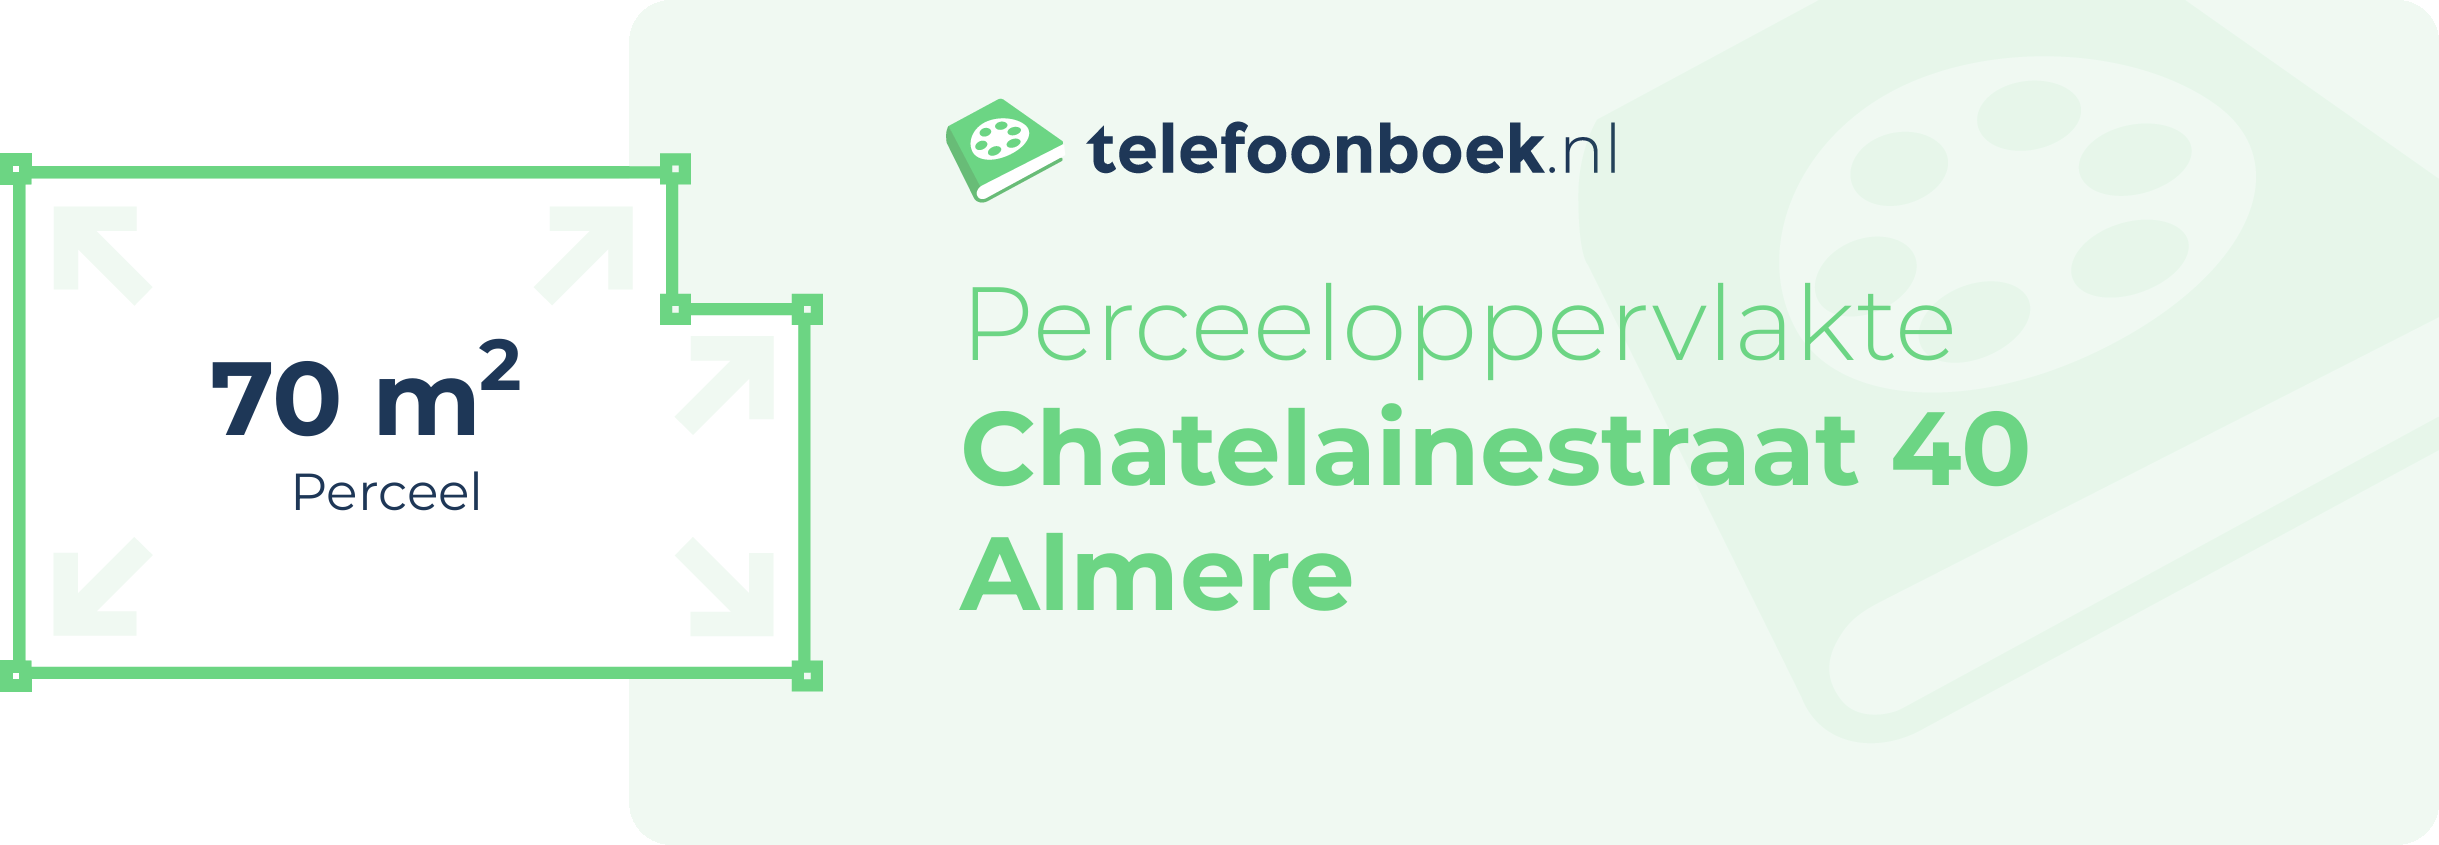 Perceeloppervlakte Chatelainestraat 40 Almere